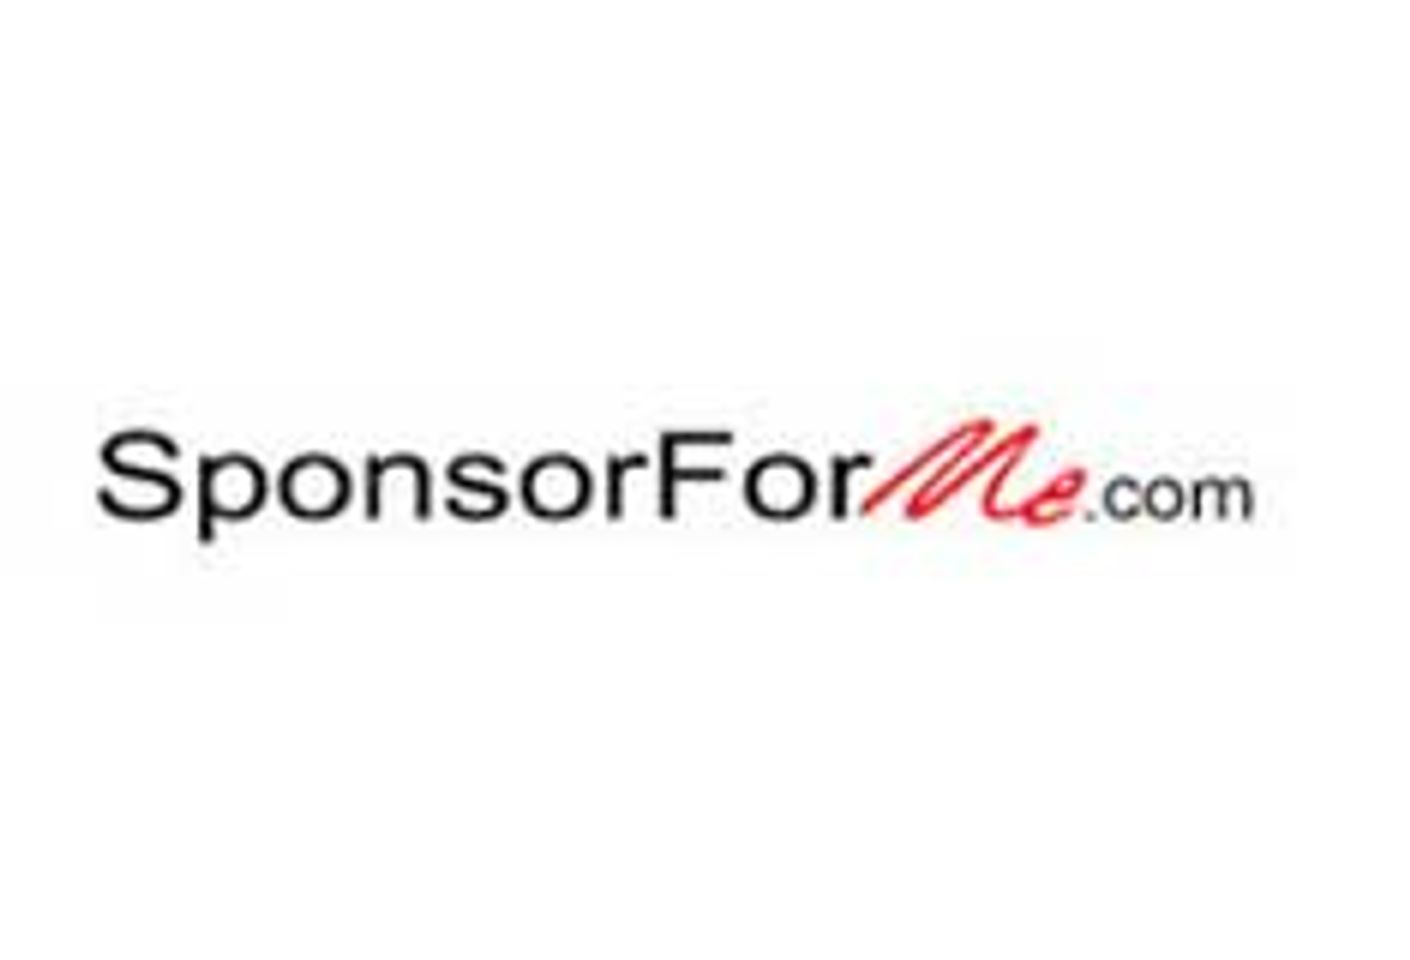 SponsorForMe.com Joins the Fight Against Breast Cancer